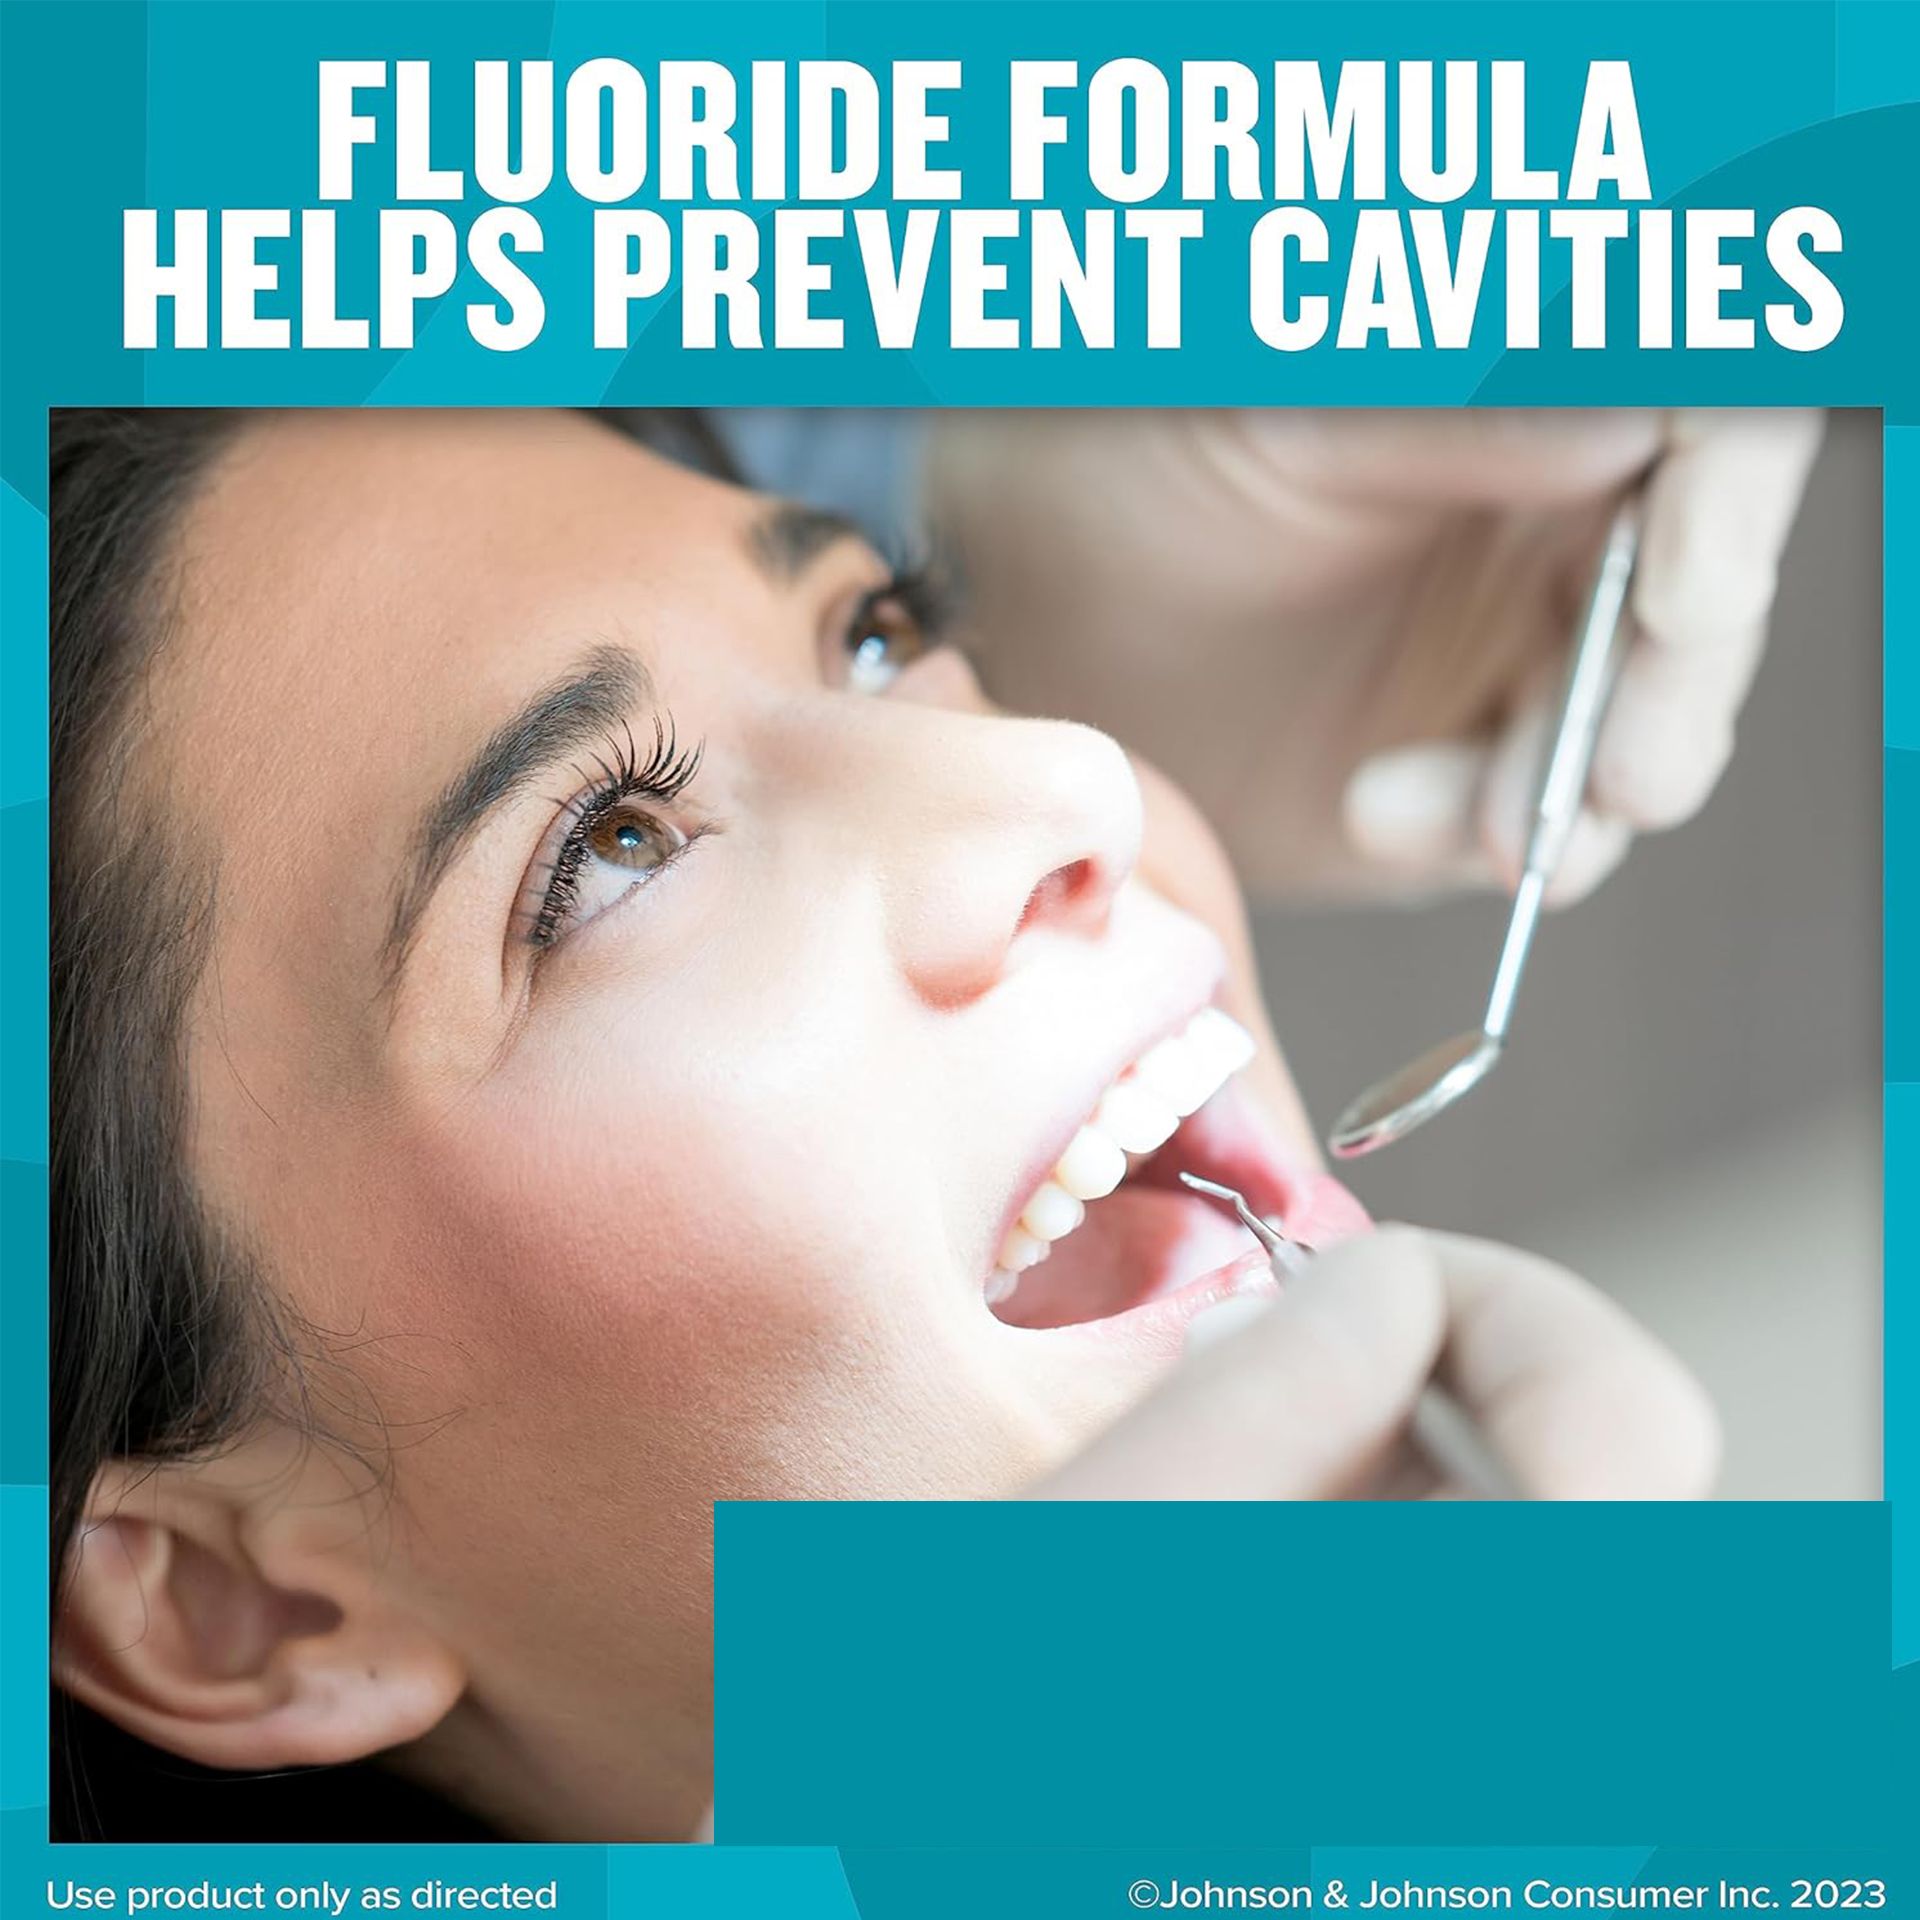 Listerine Essential Care Original Gel Fluoride Toothpaste  